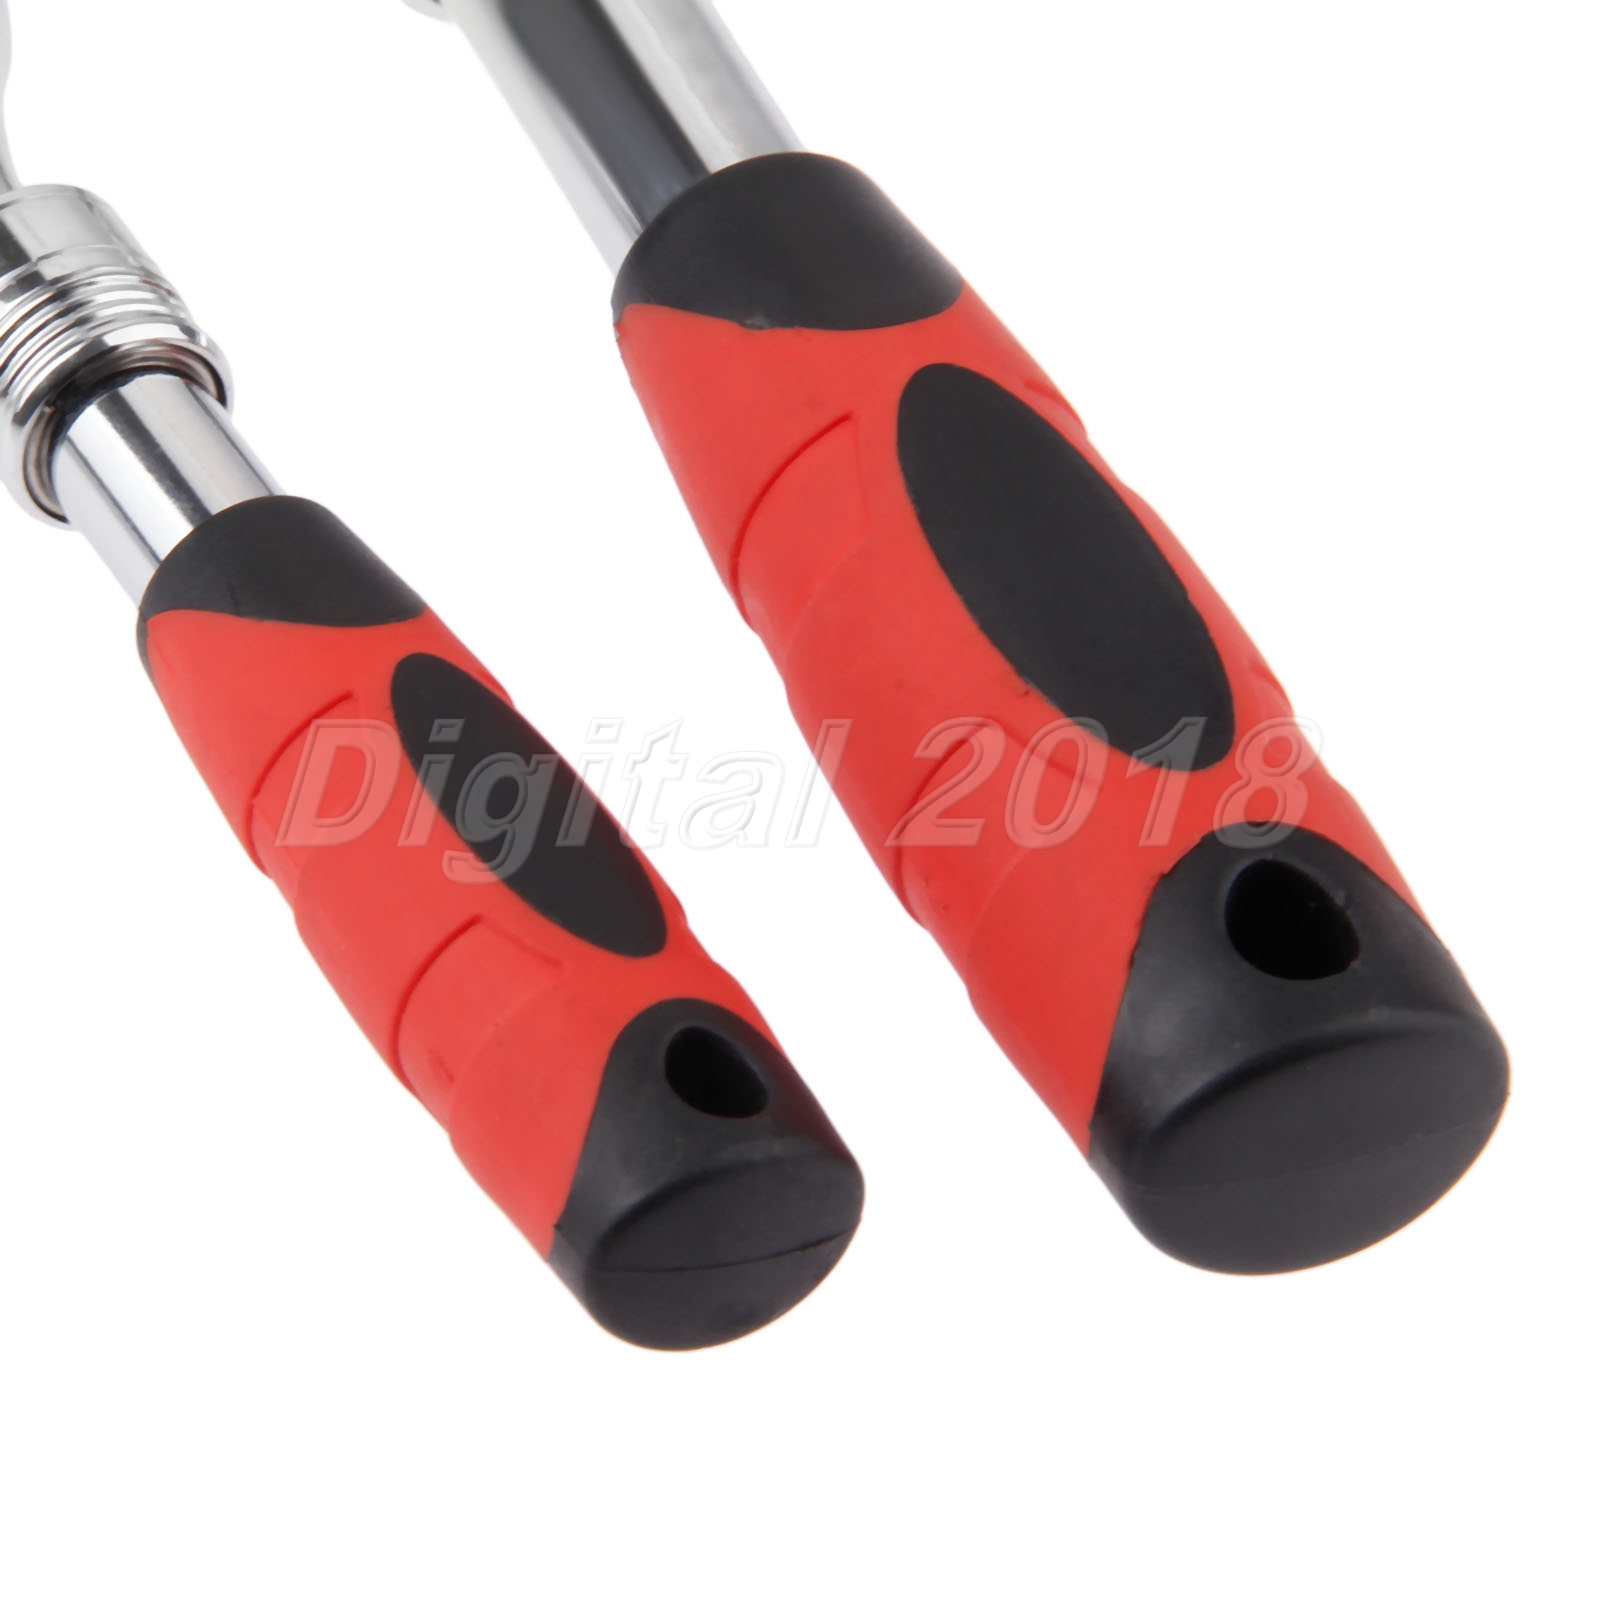 Durable 1//4/" 3//8/" 1//2/" Extendable Long Handle Ratchet Socket Wrench 72 Teeth 1pc